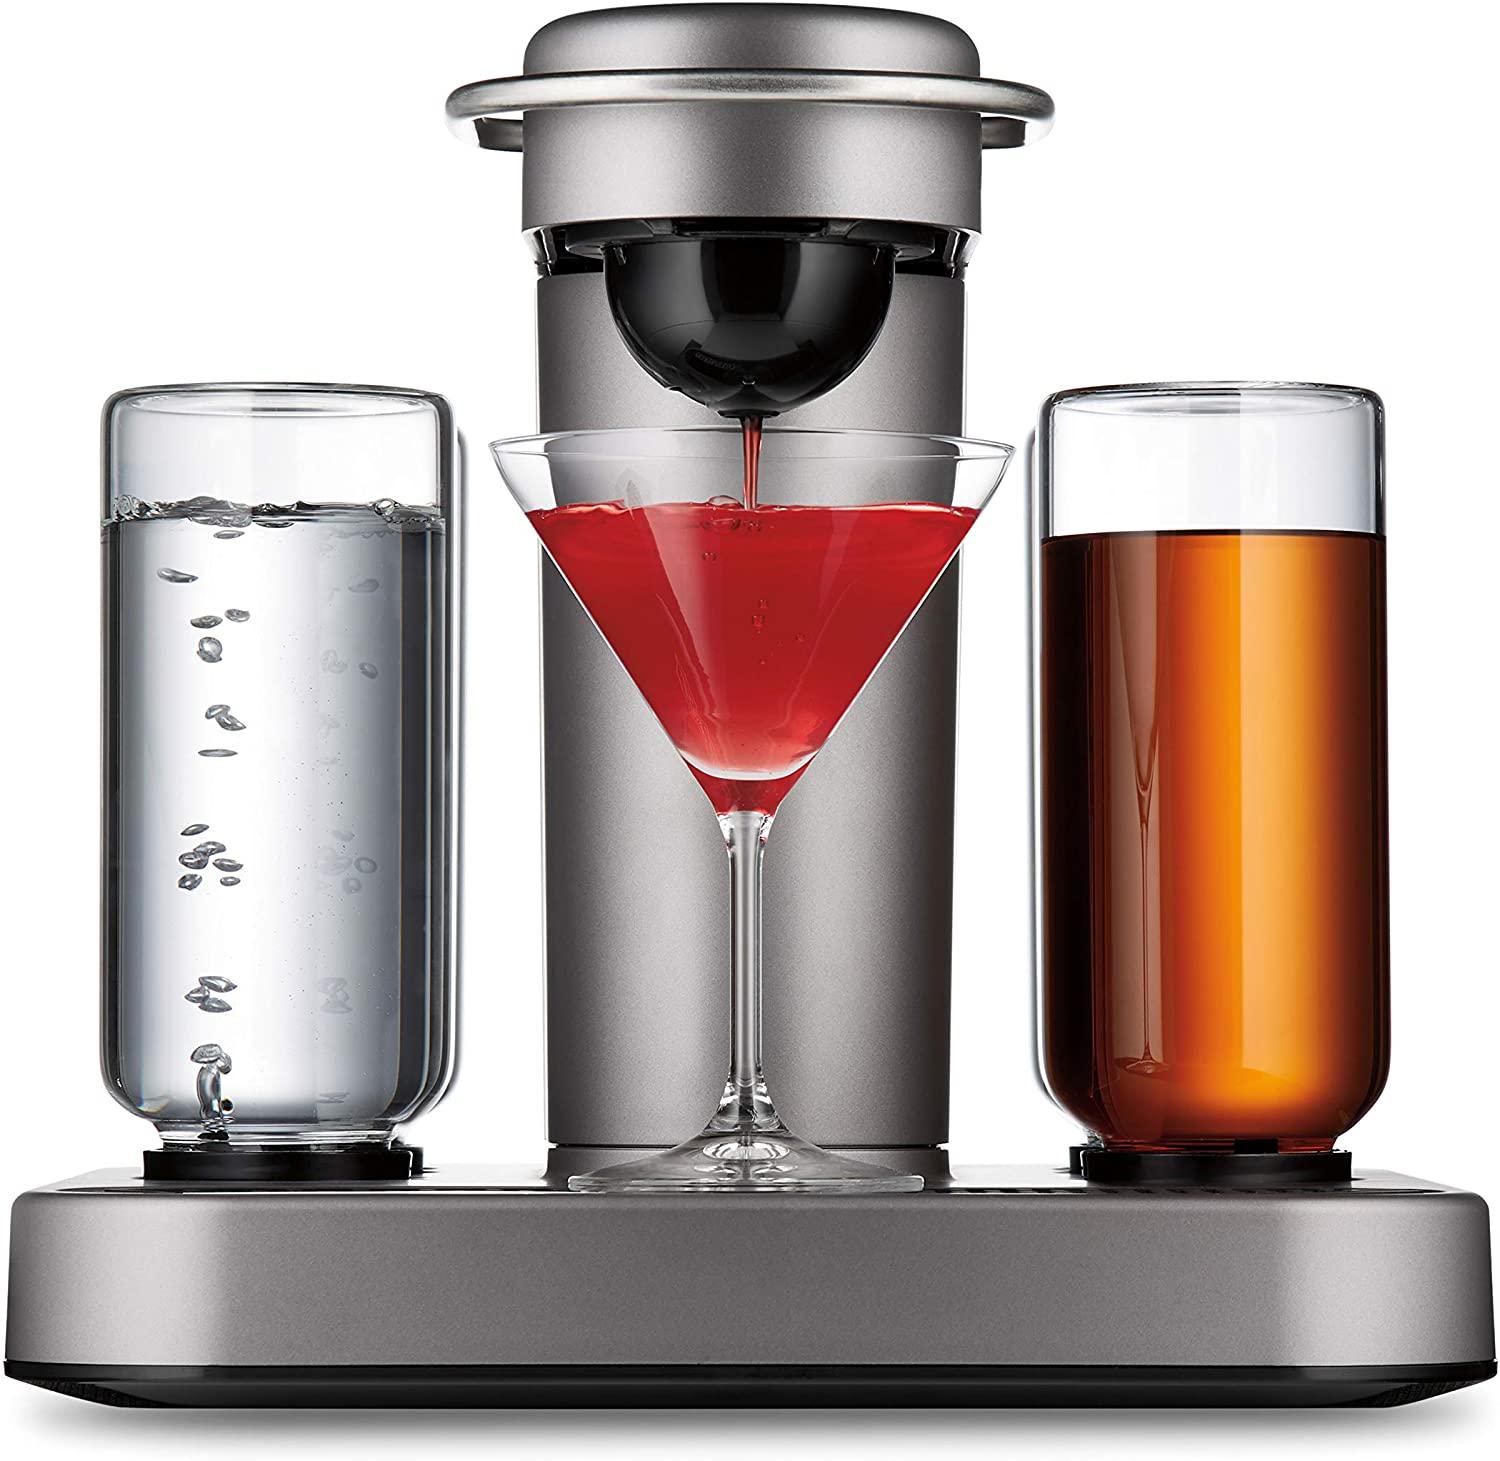 Bartesian Premium Cocktail and Margarita Machine for $279.88 Shipped